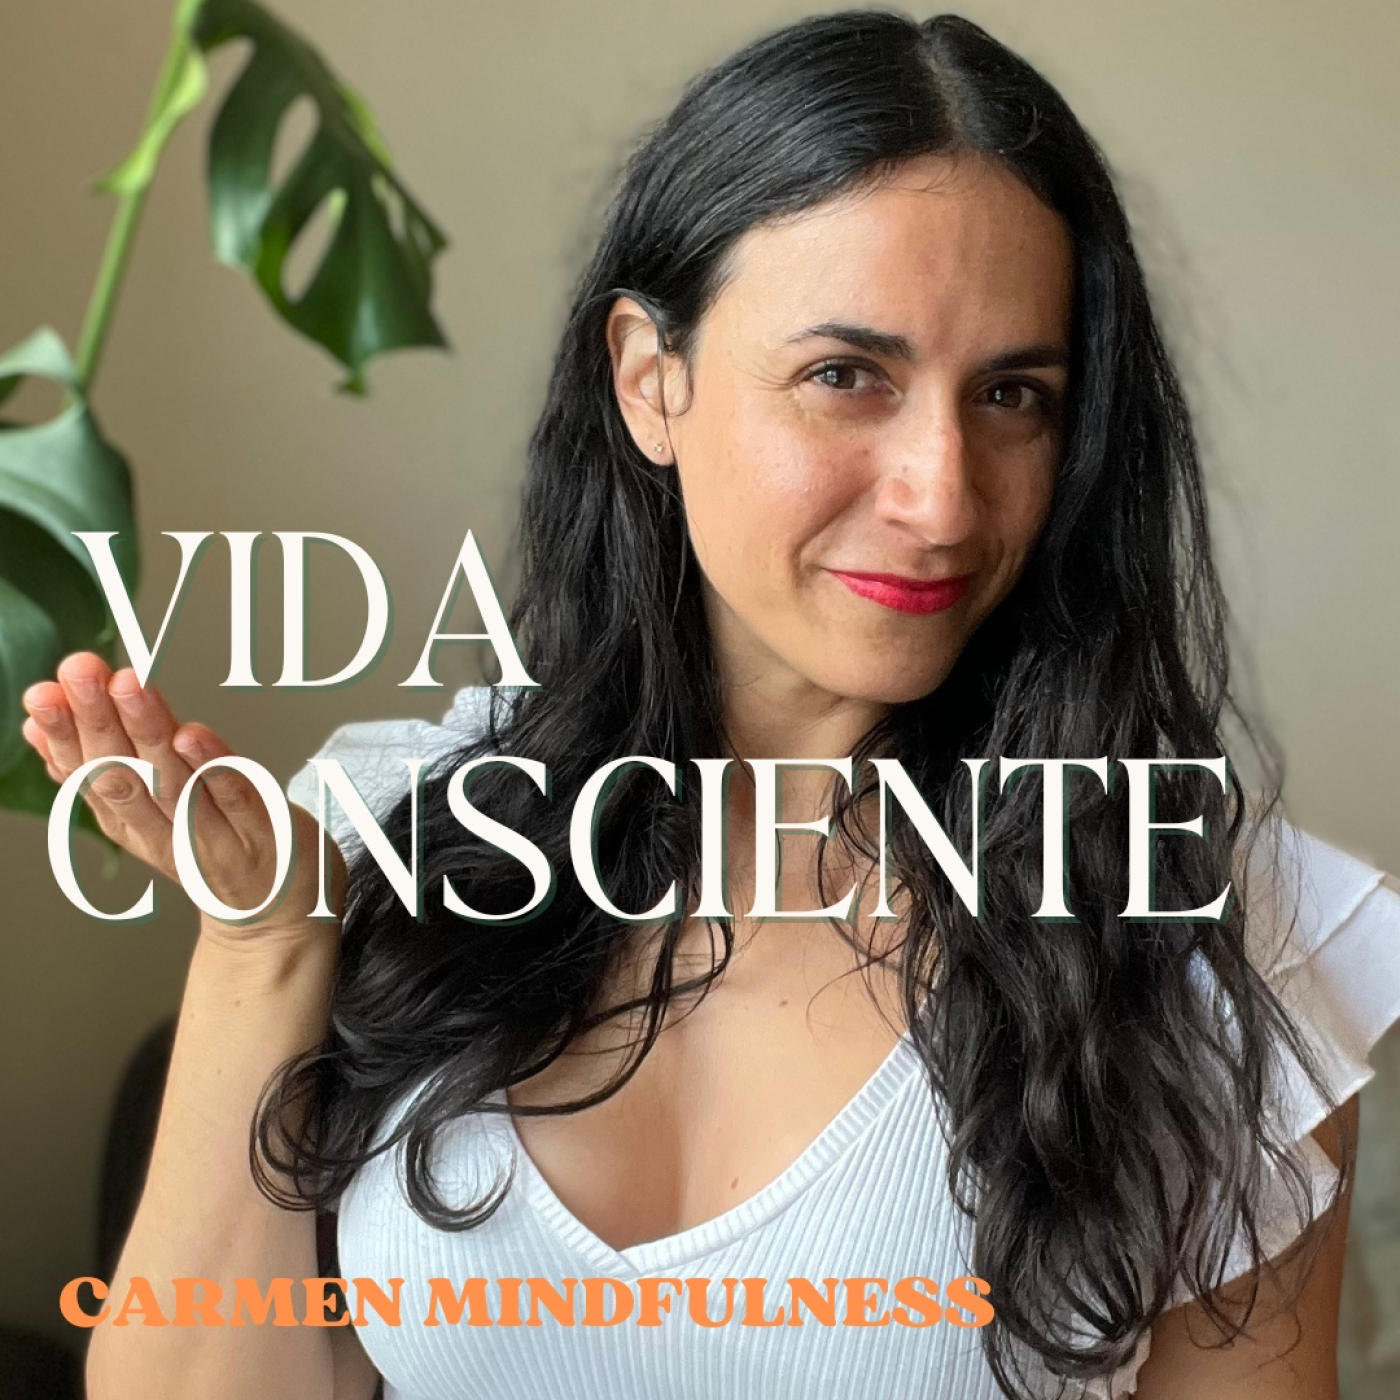 Vida consciente: Carmen Mindfulness